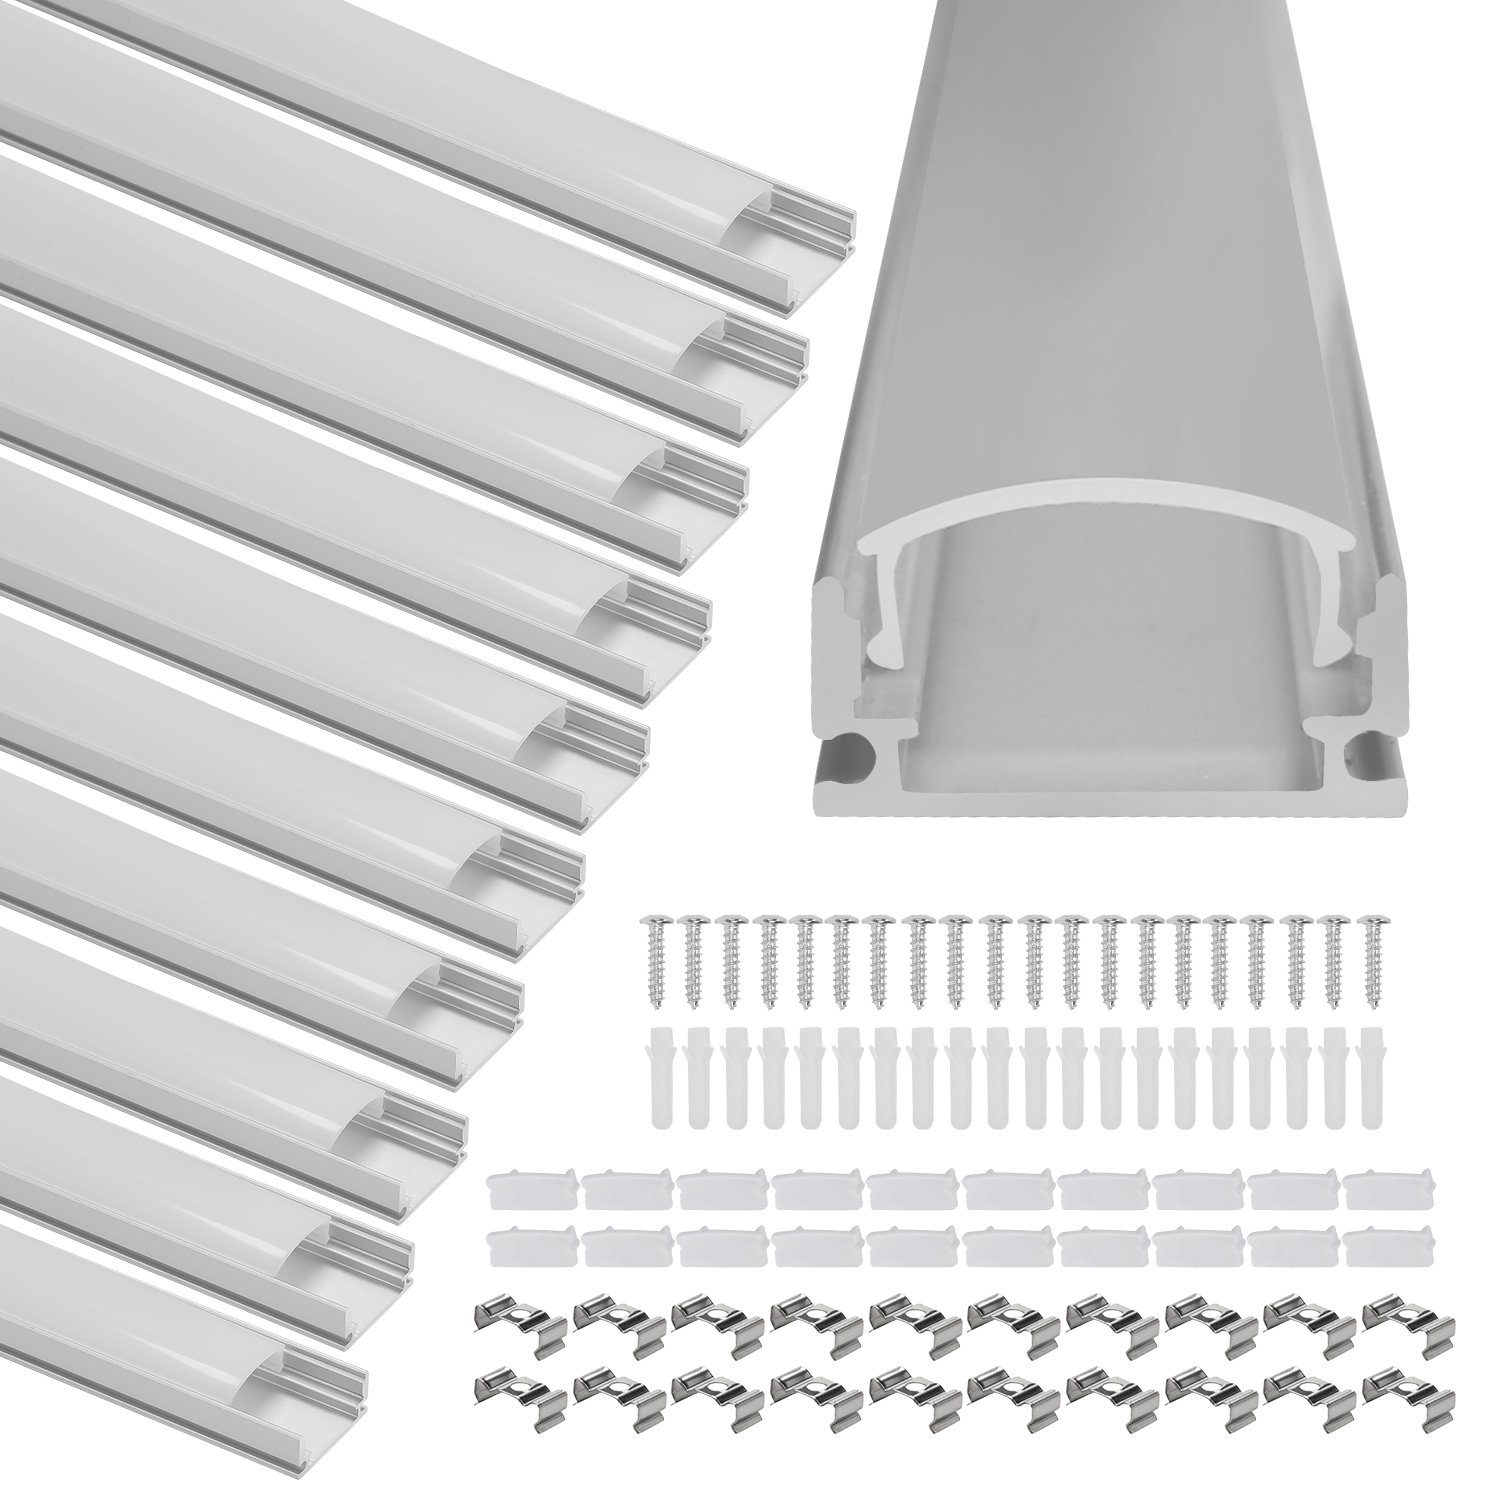 Clanmacy LED-Stripe-Profil 10x 1m LED Aluminium Profil LED Strip Schiene